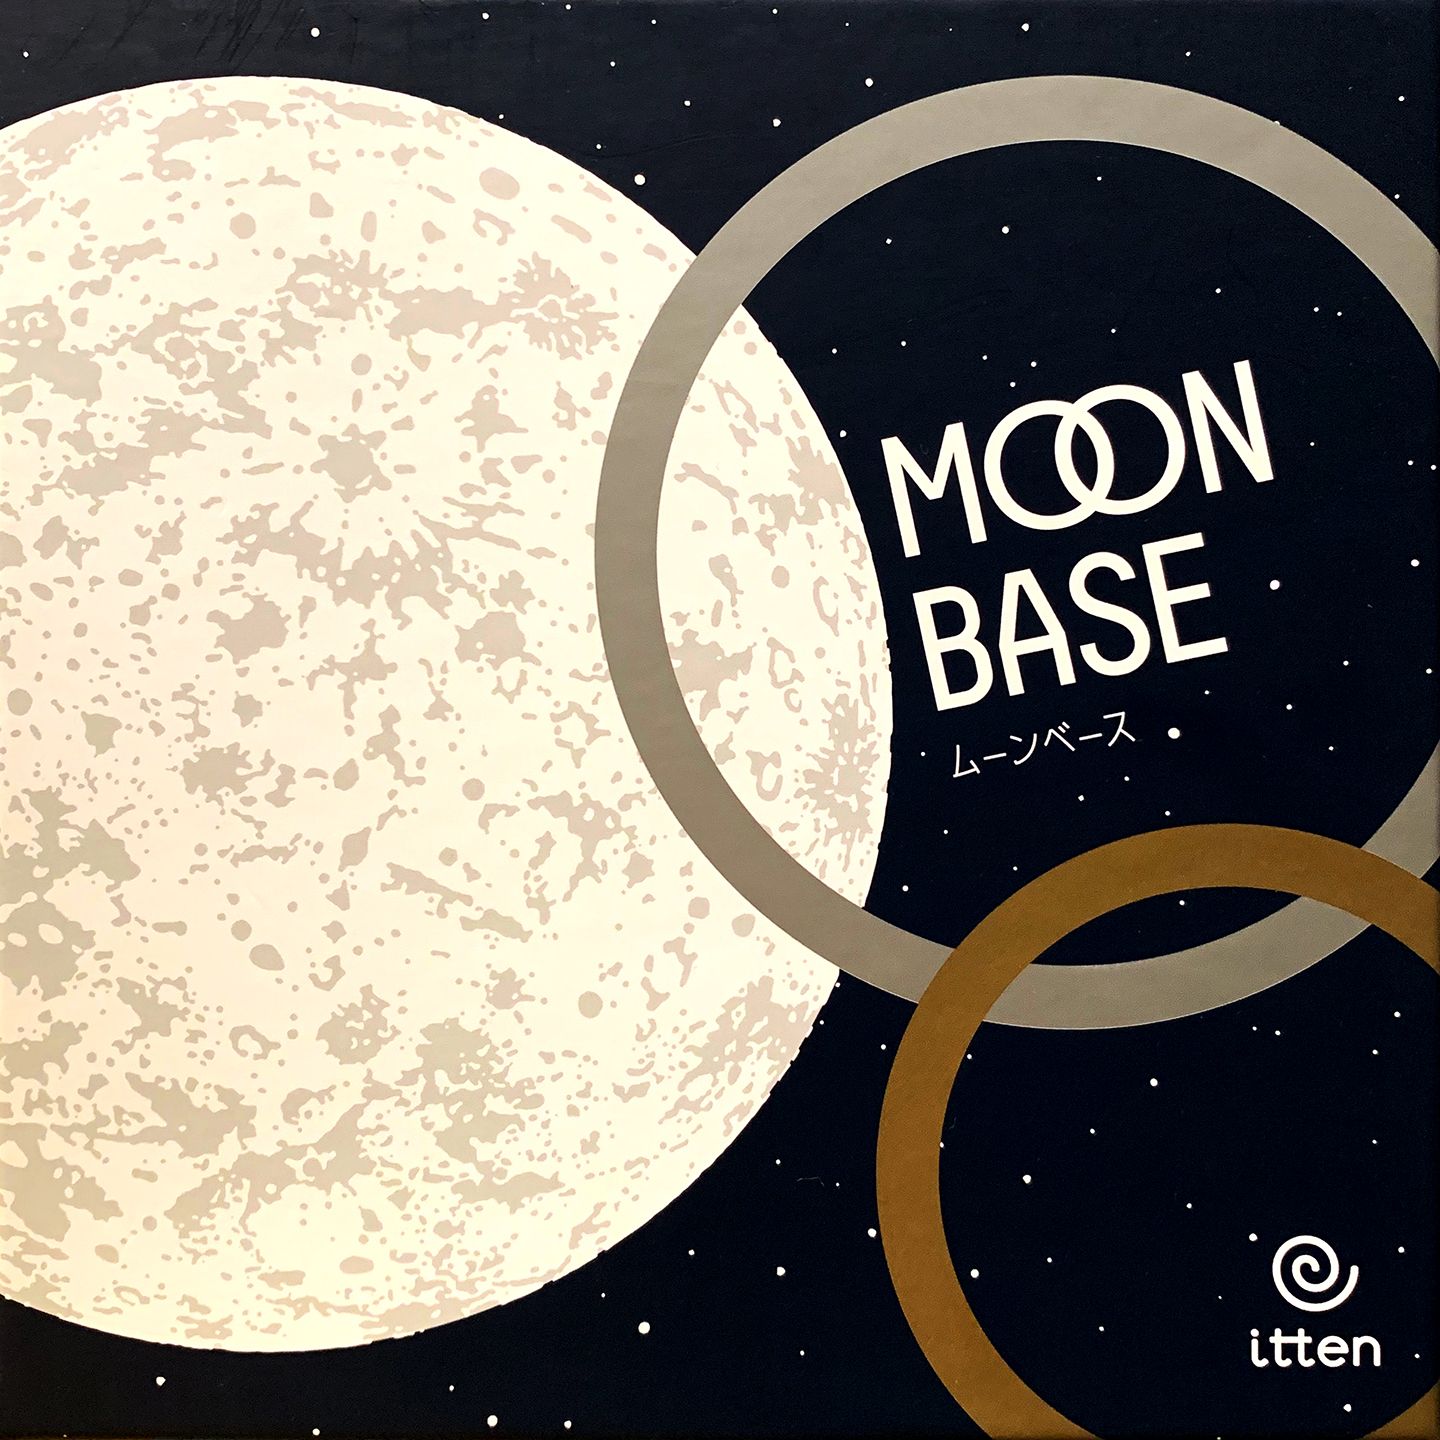 База Moon Base Brown. SFS Moon Base. Zvezda Moon Base. Moon Base logo. Мун базу